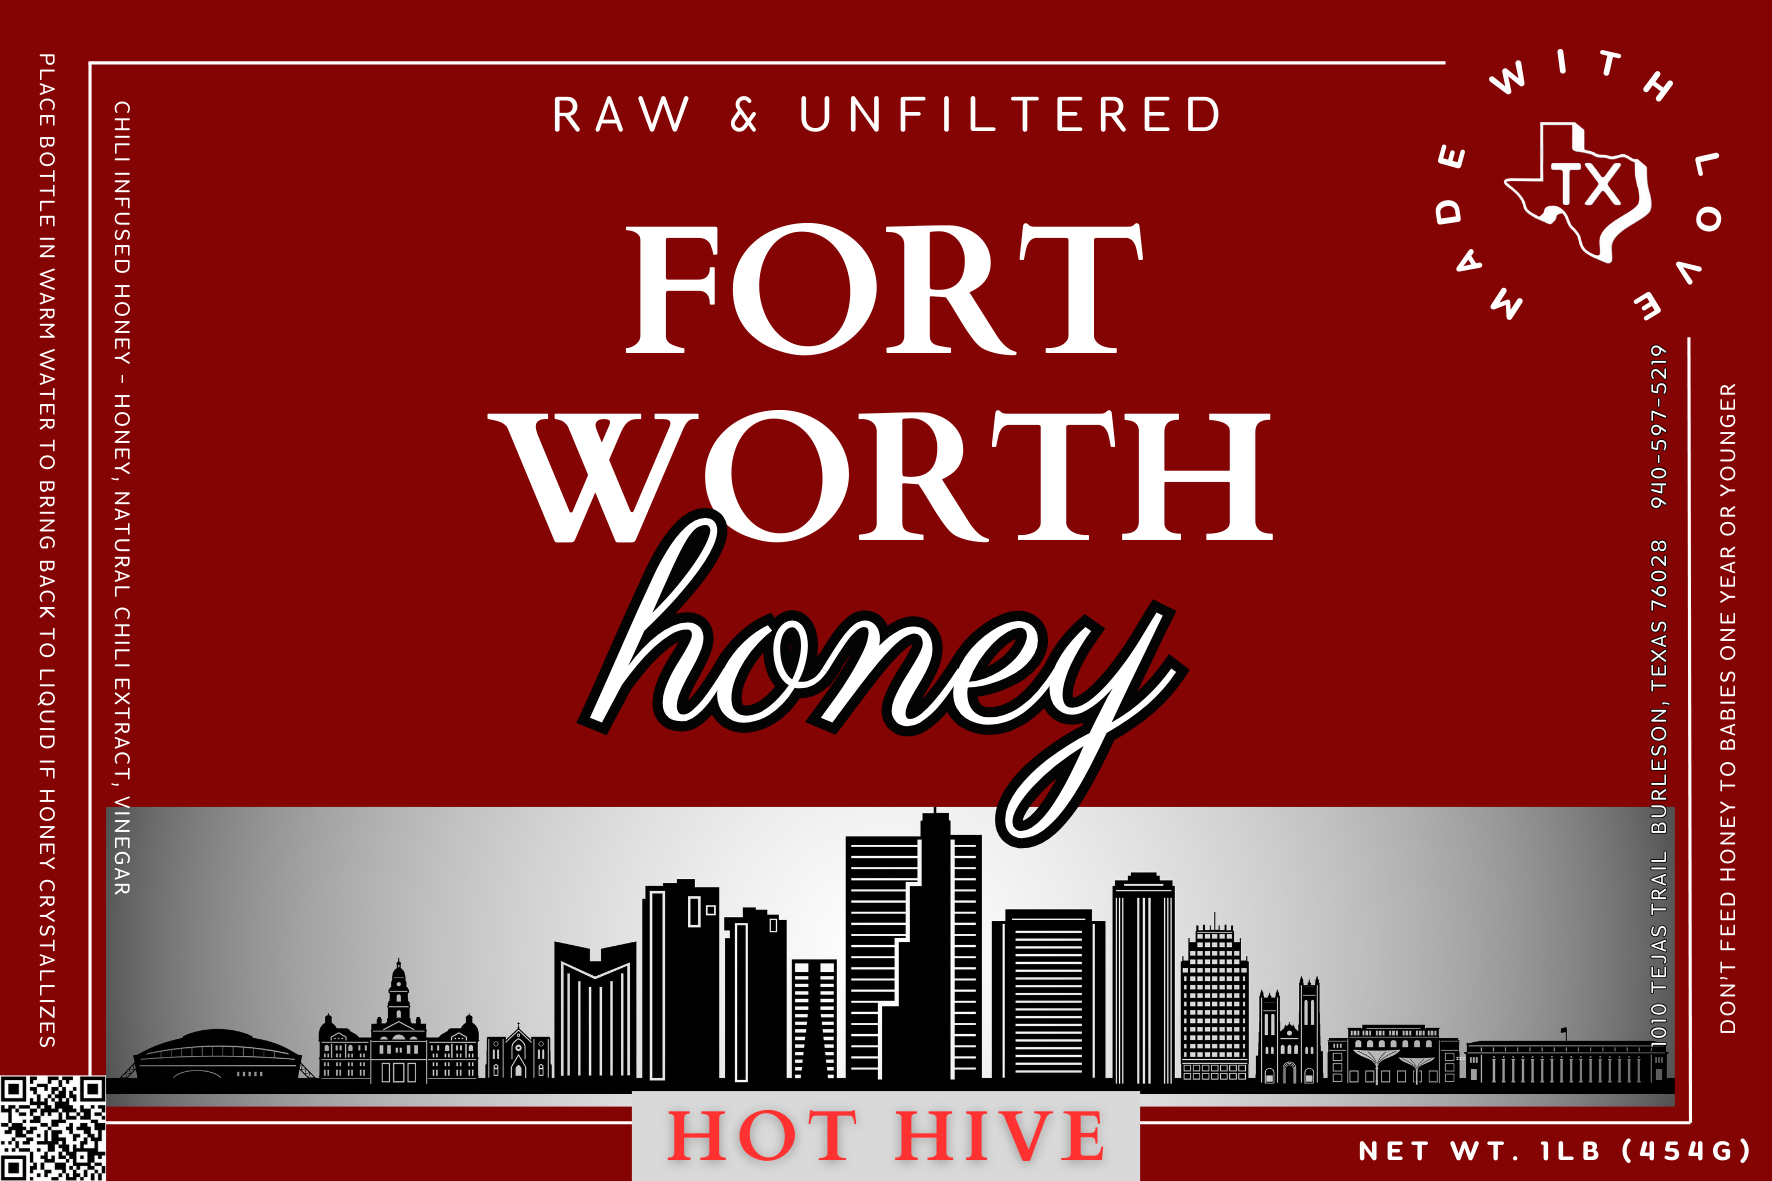 Fort Worth Honey - Hot Hive